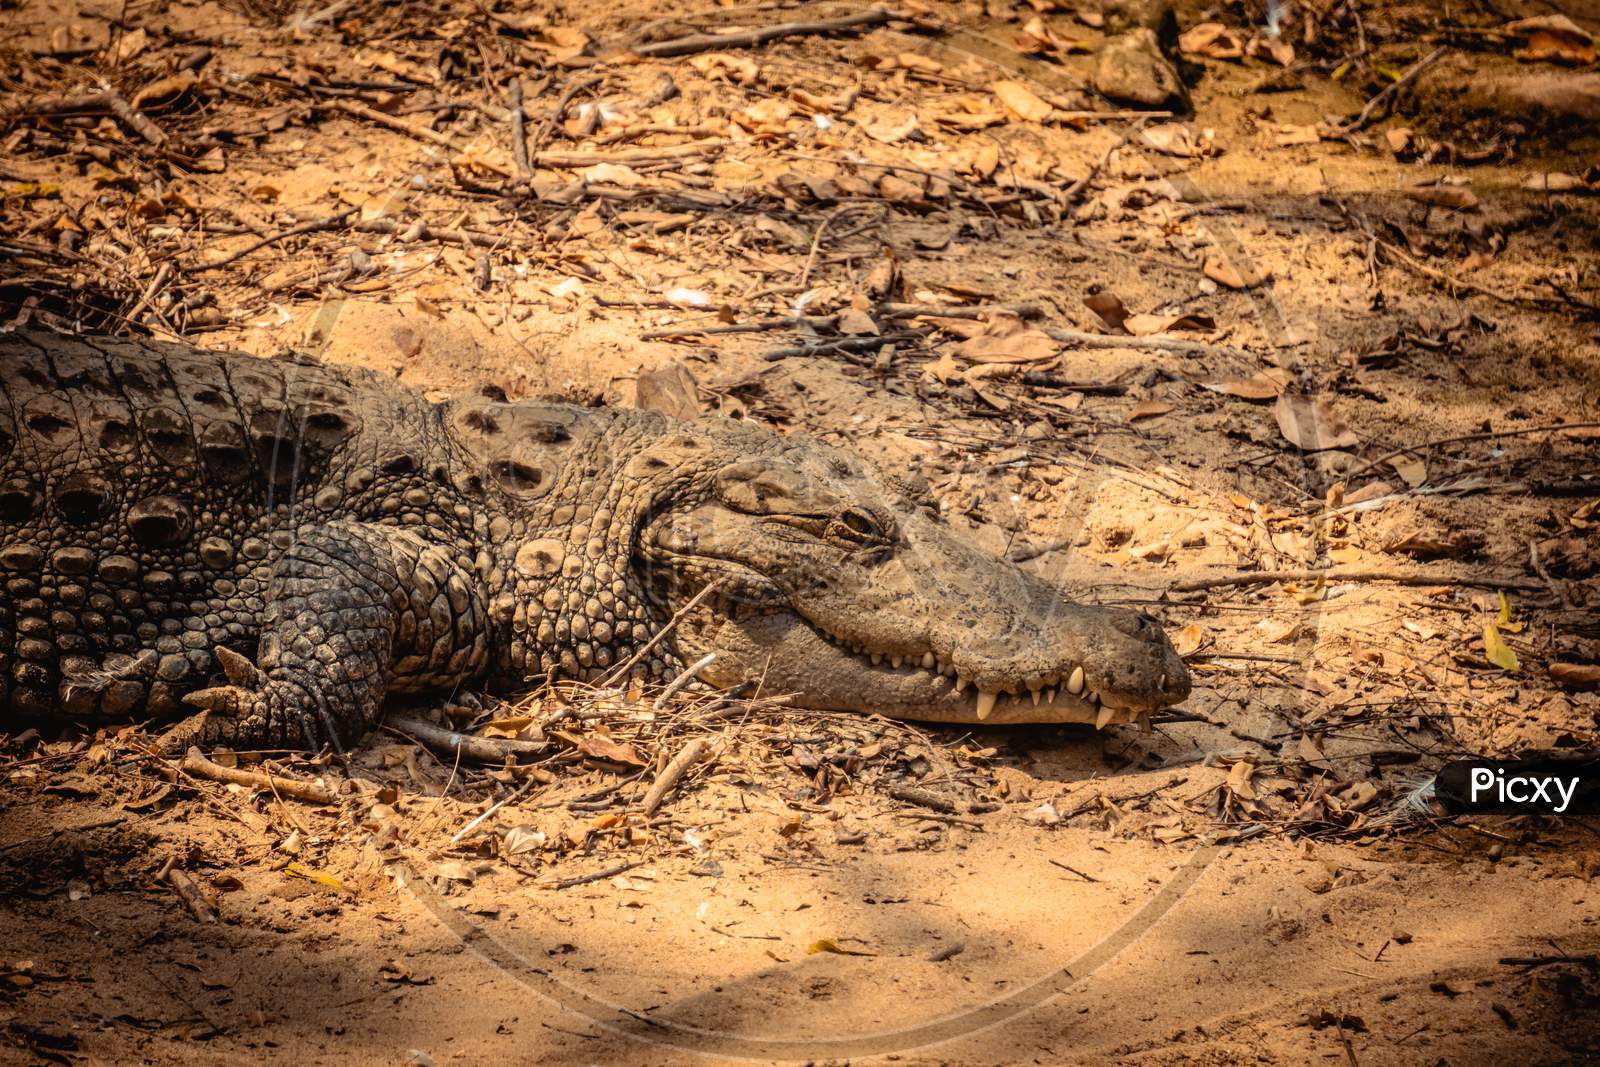 Mugger Or Marsh Crocodile Living At The Madras Crocodile Bank Trust and Centre for Herpetology, ECR Chennai, Tamilnadu, South India